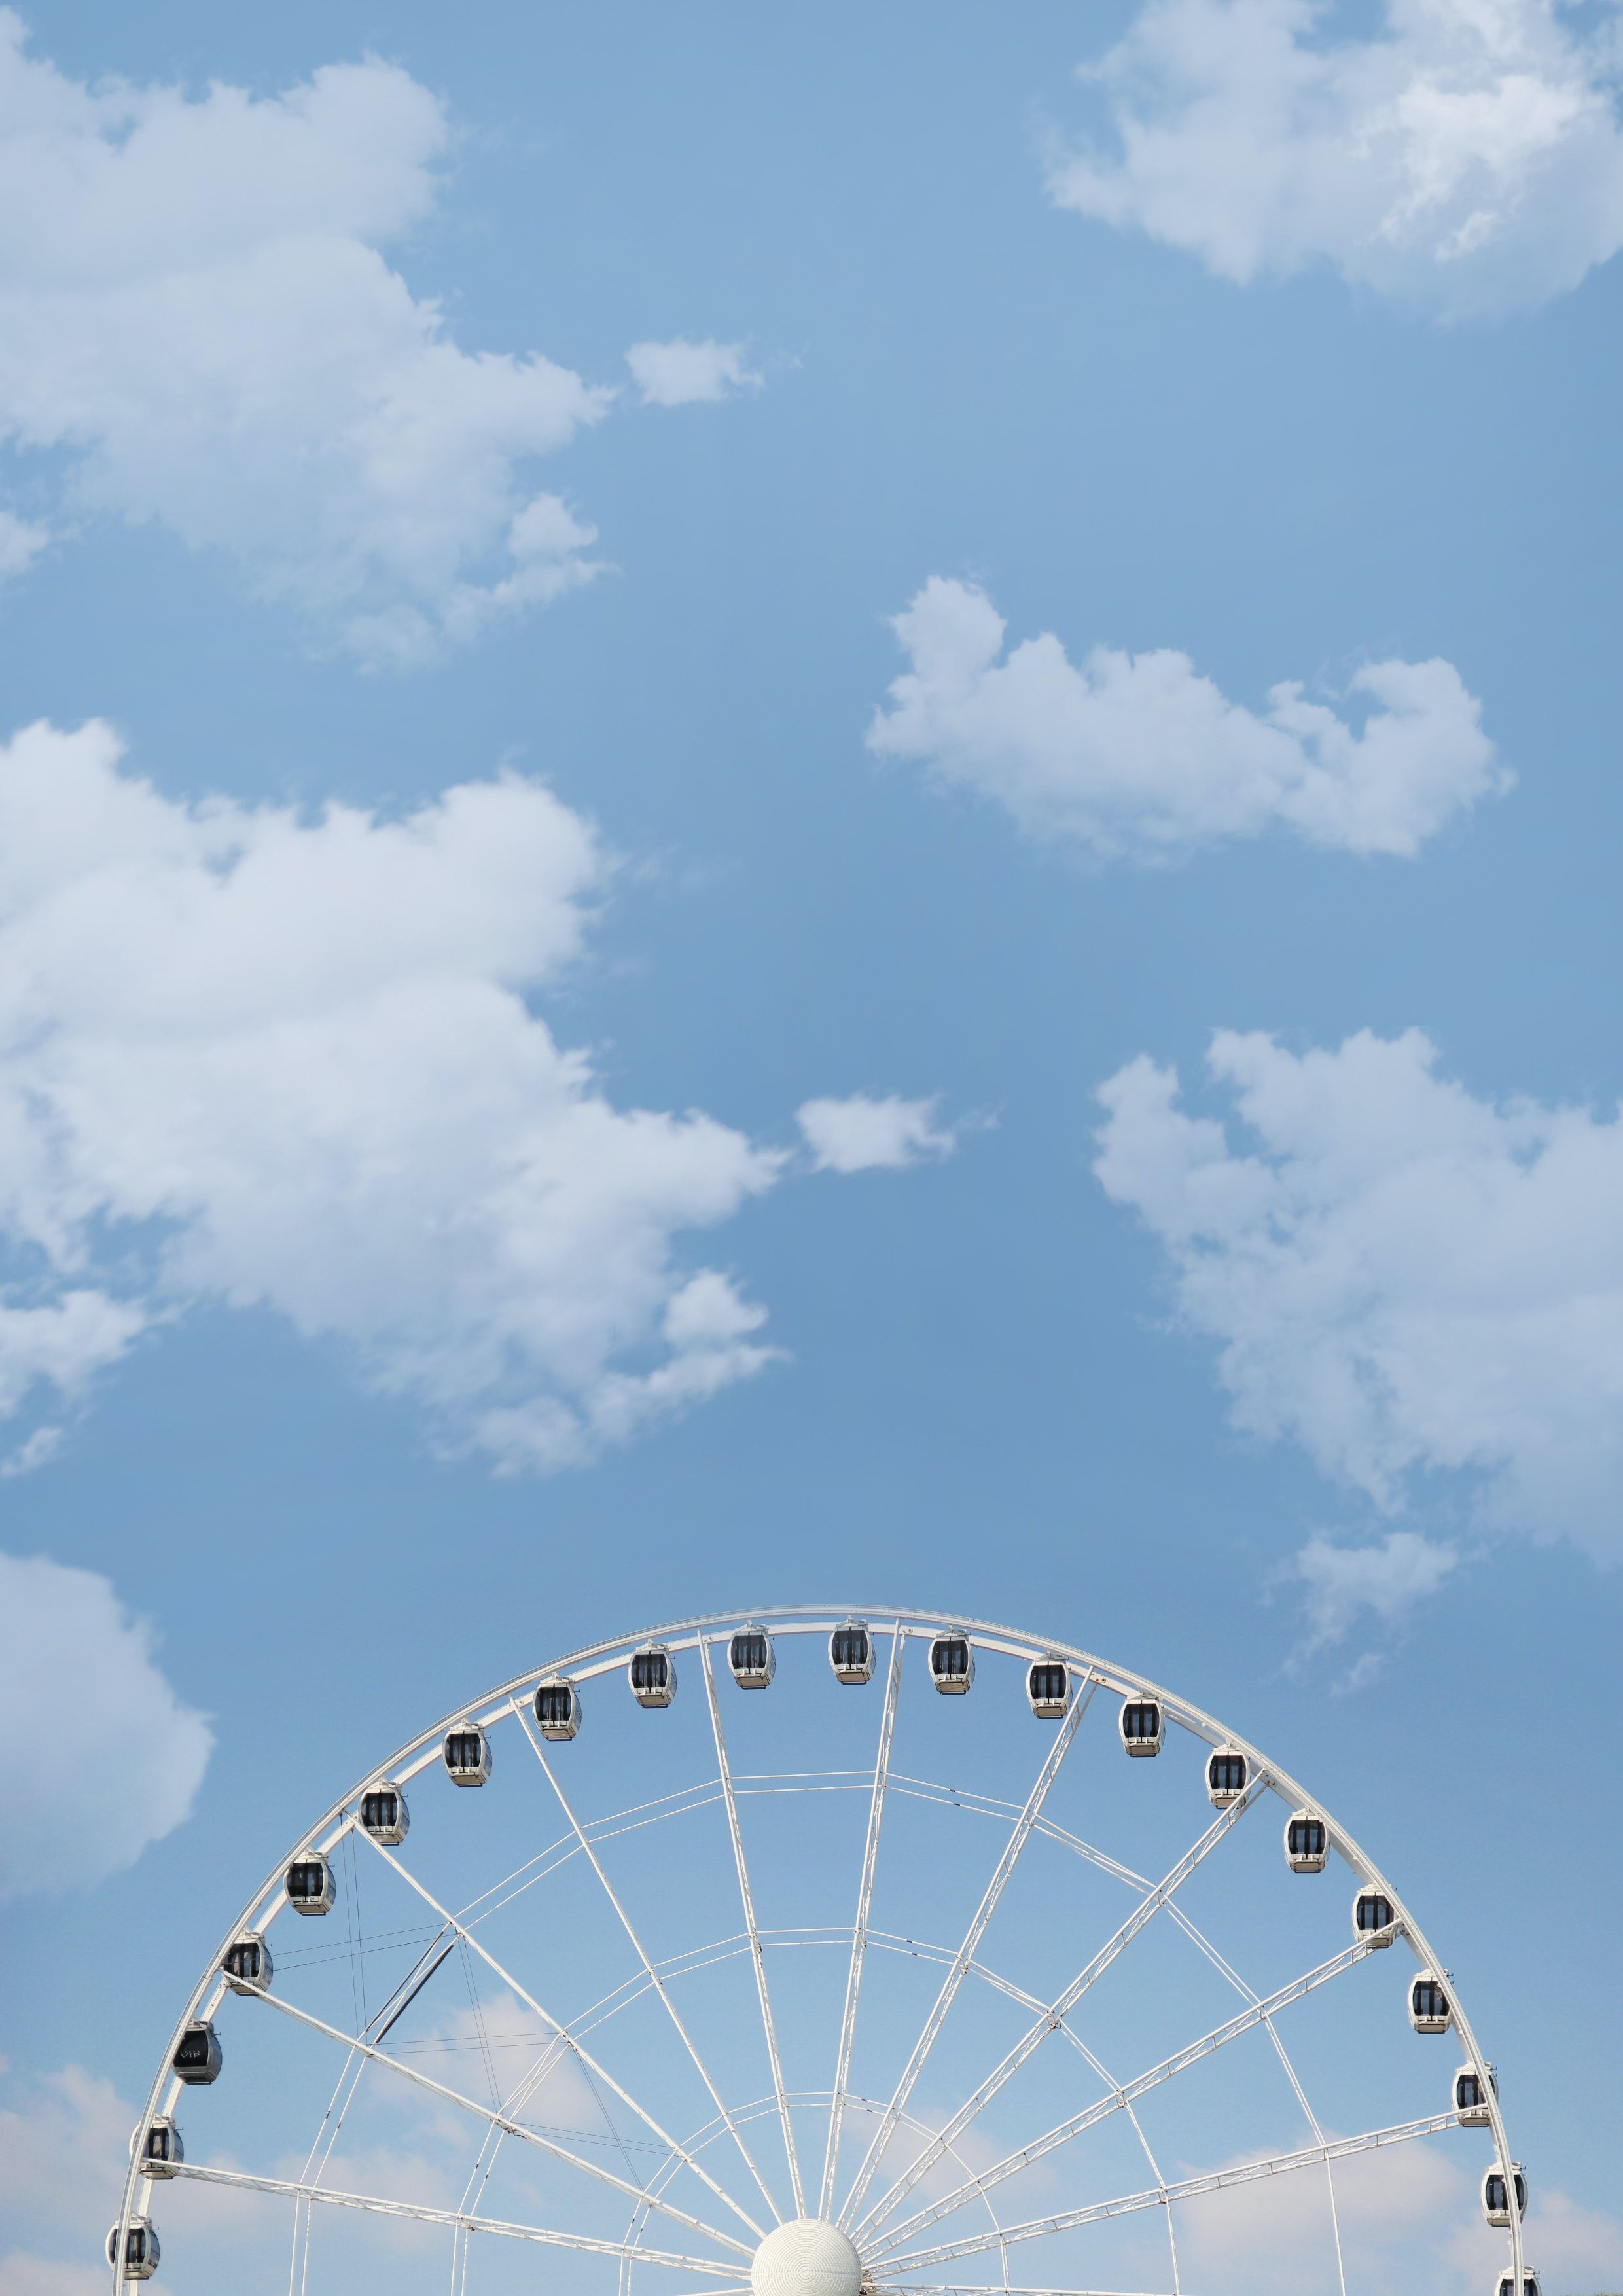 A ferris wheel with people on it in the sky - Blue, pastel blue, light blue